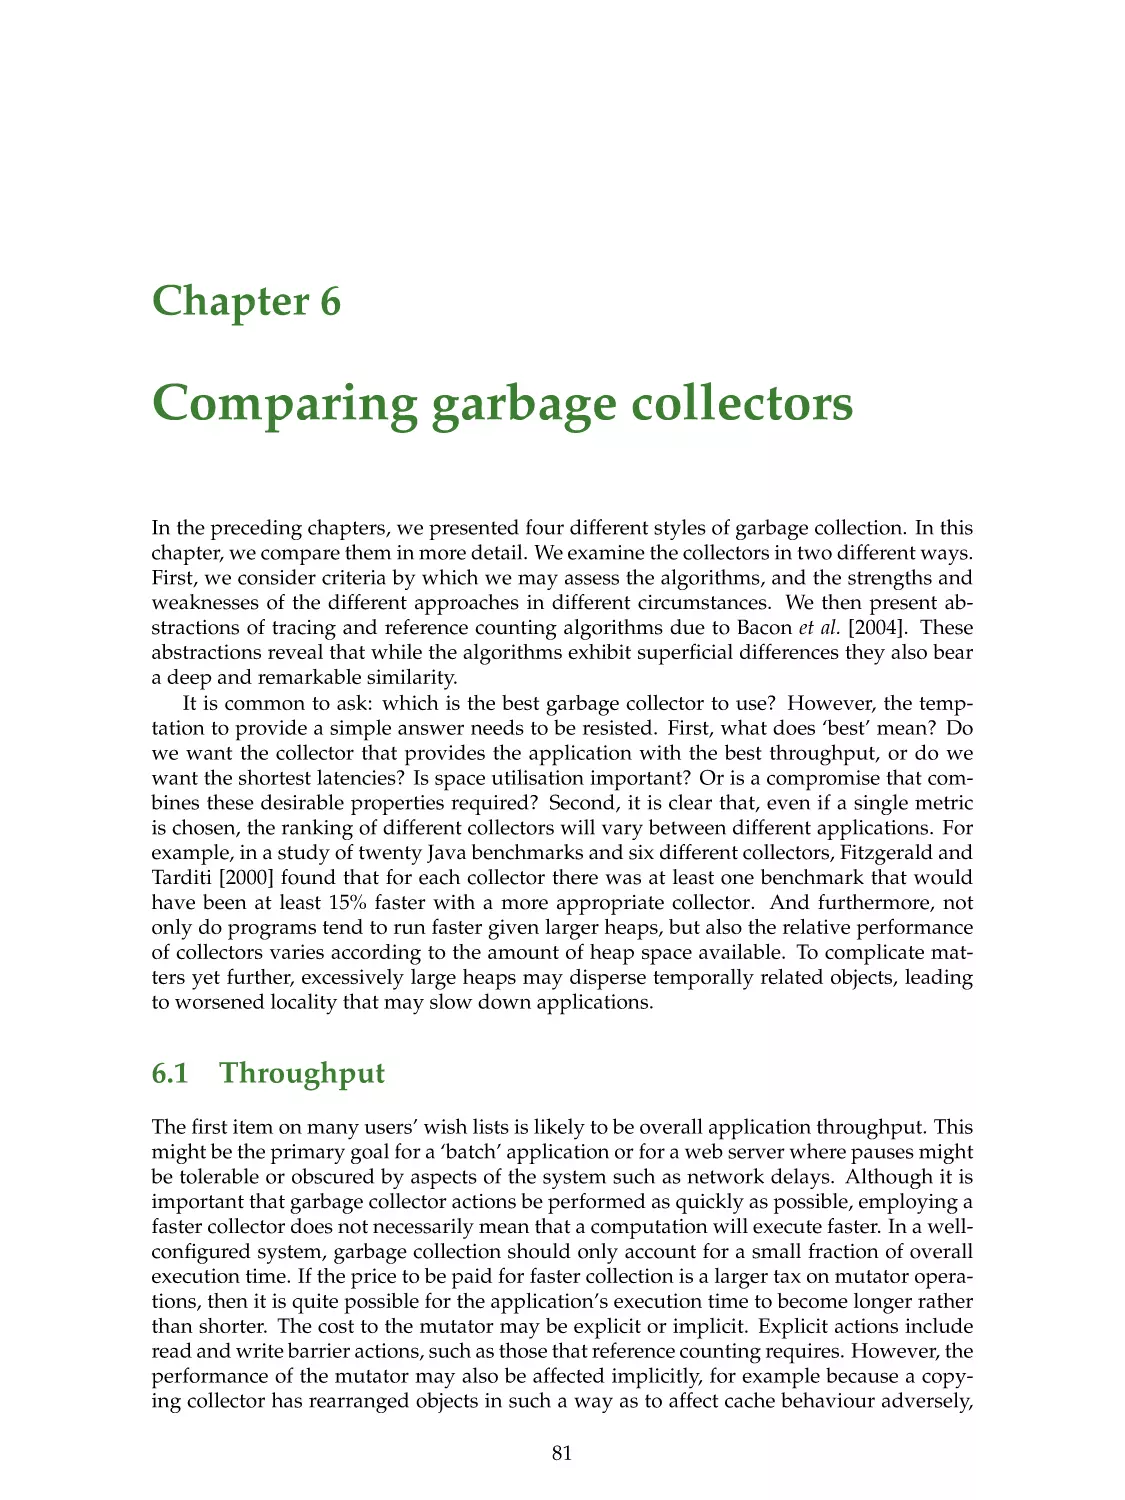 6. Comparing garbage collectors
6.1. Throughput